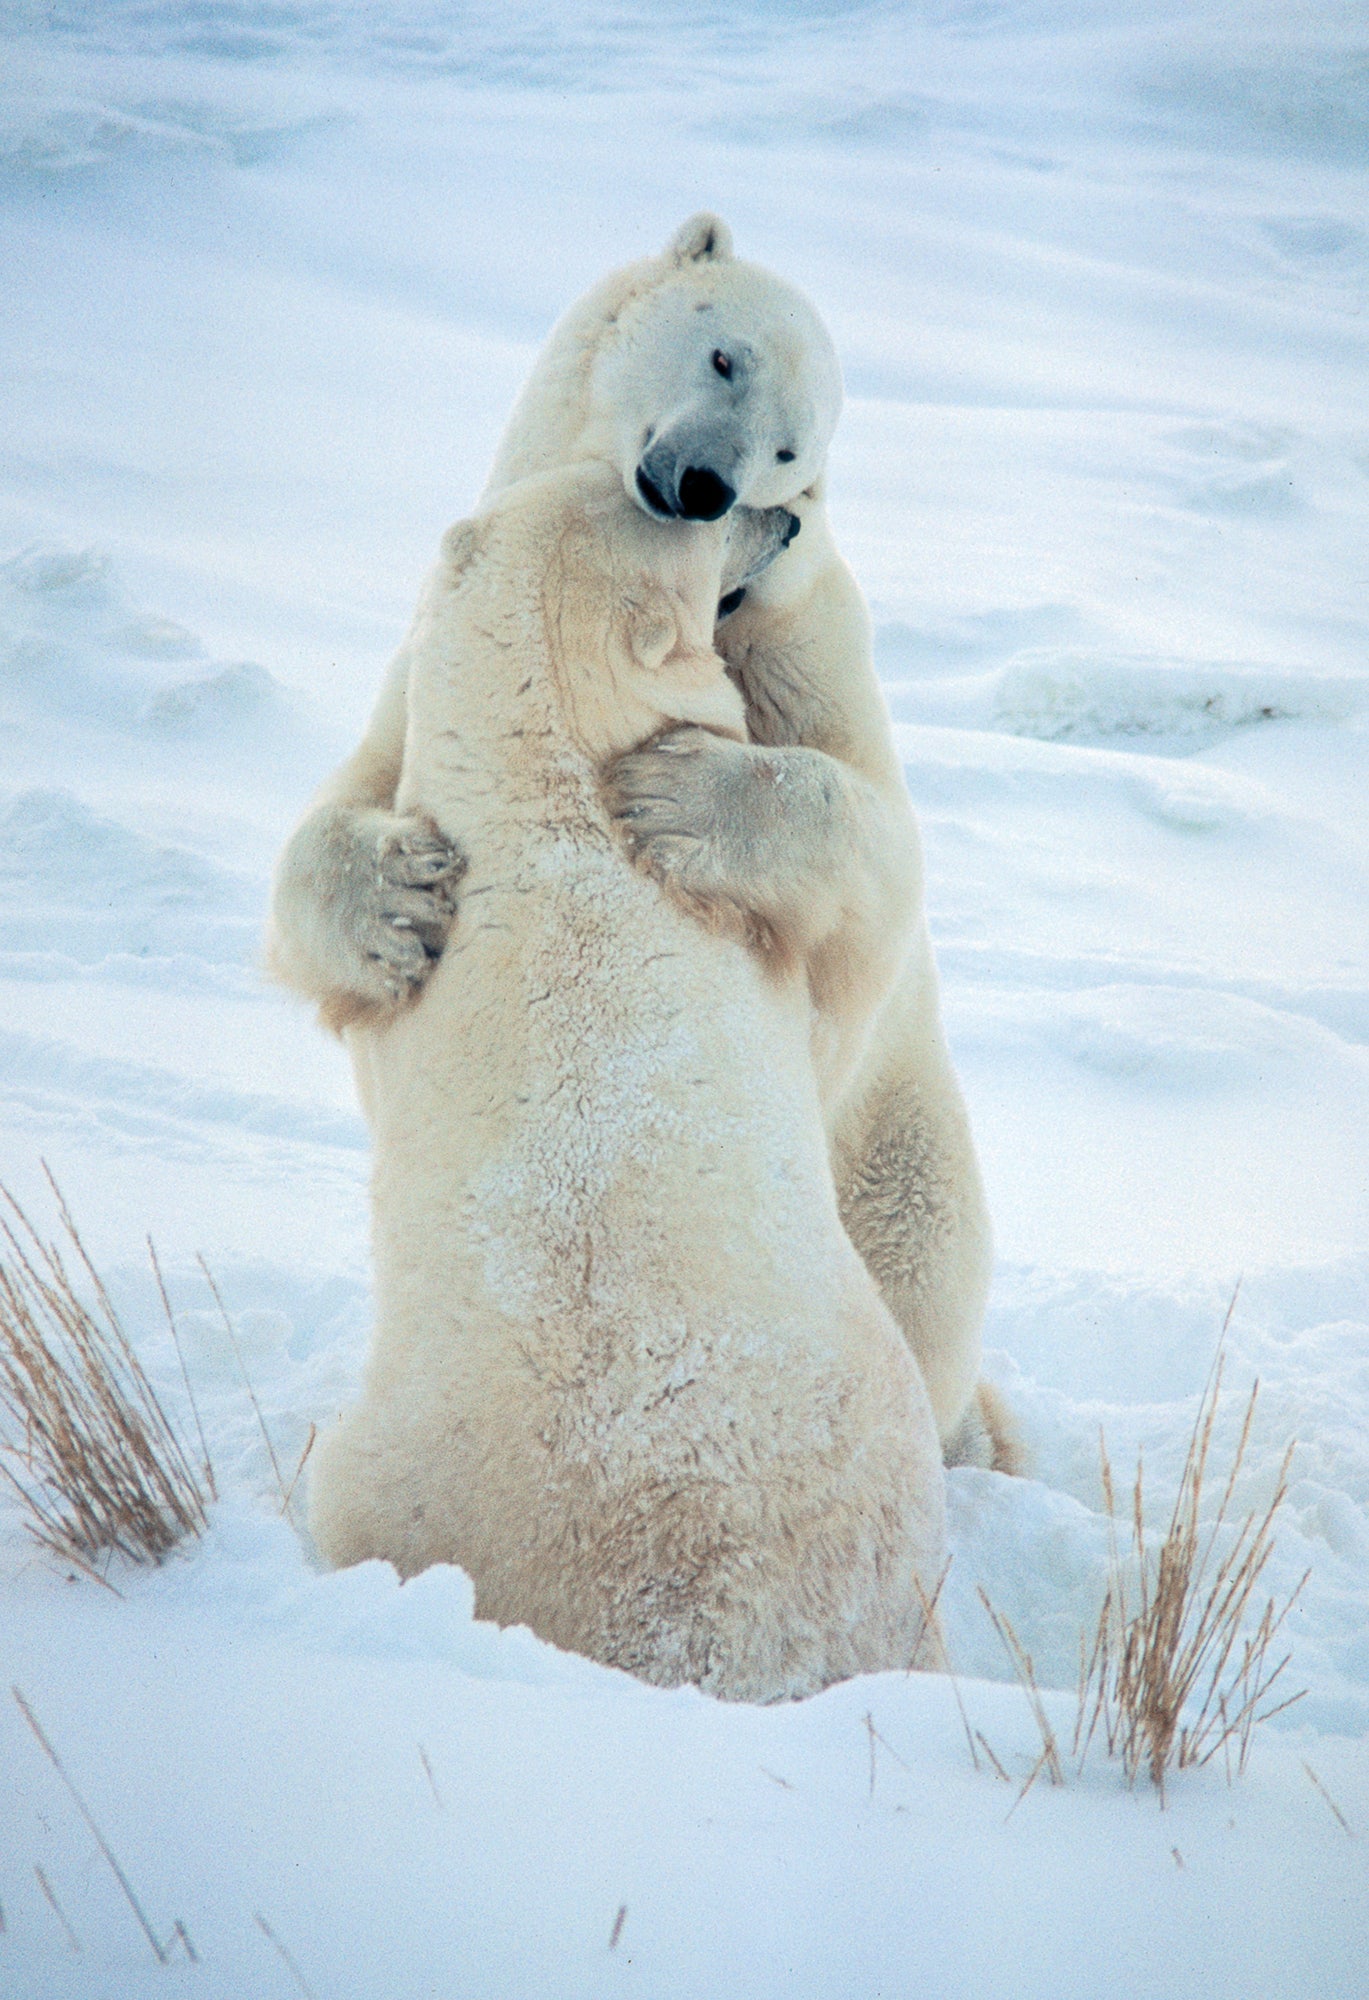 Two polar bears in a bear hug on the snow. End of image description.